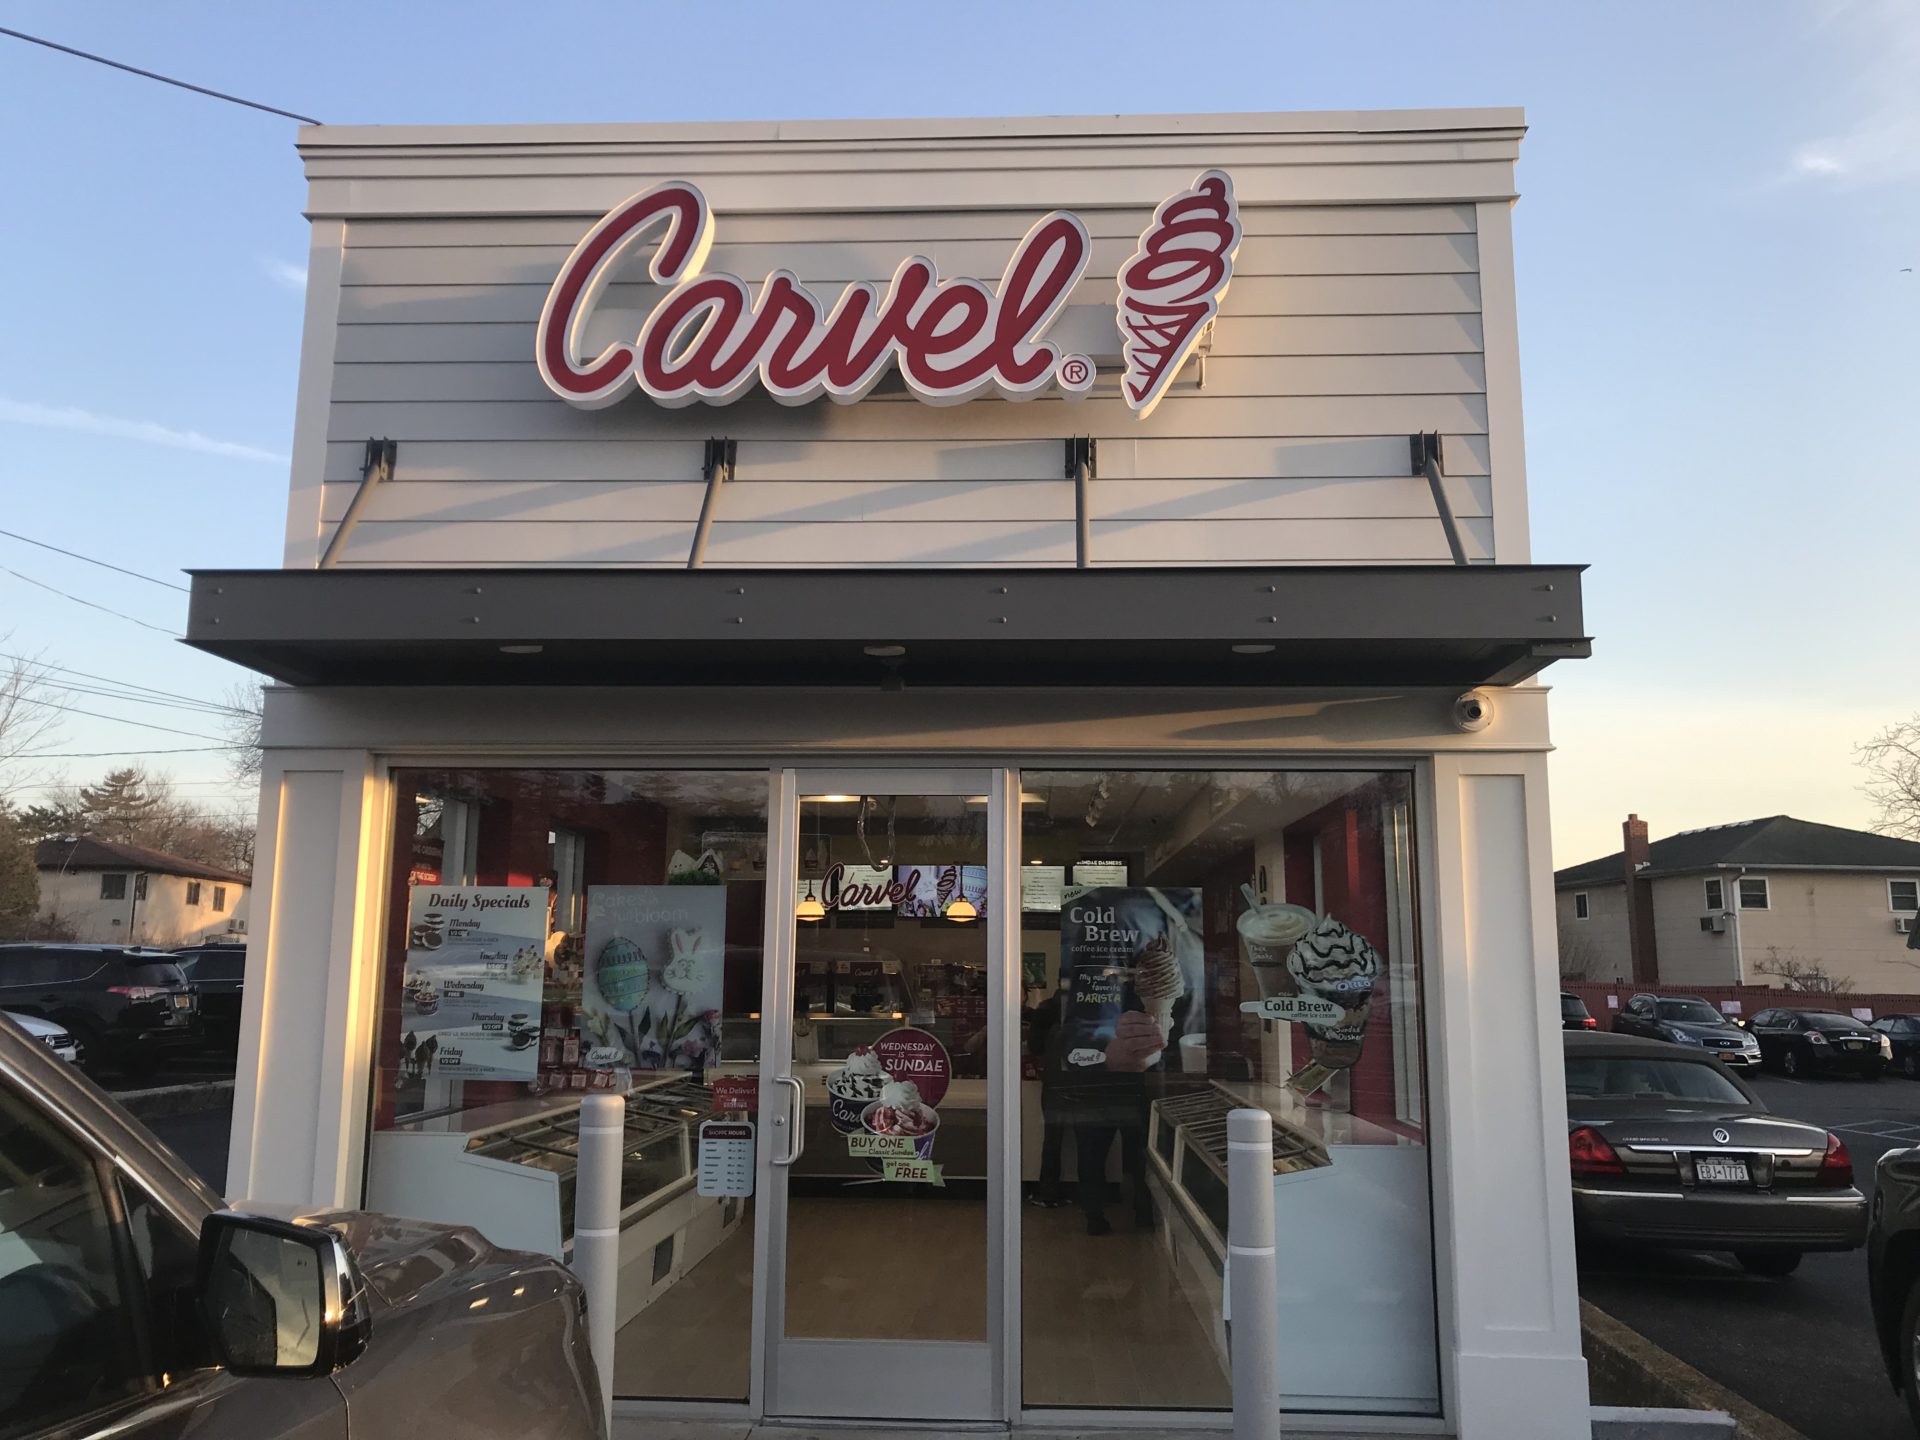 A Carvel establishment.